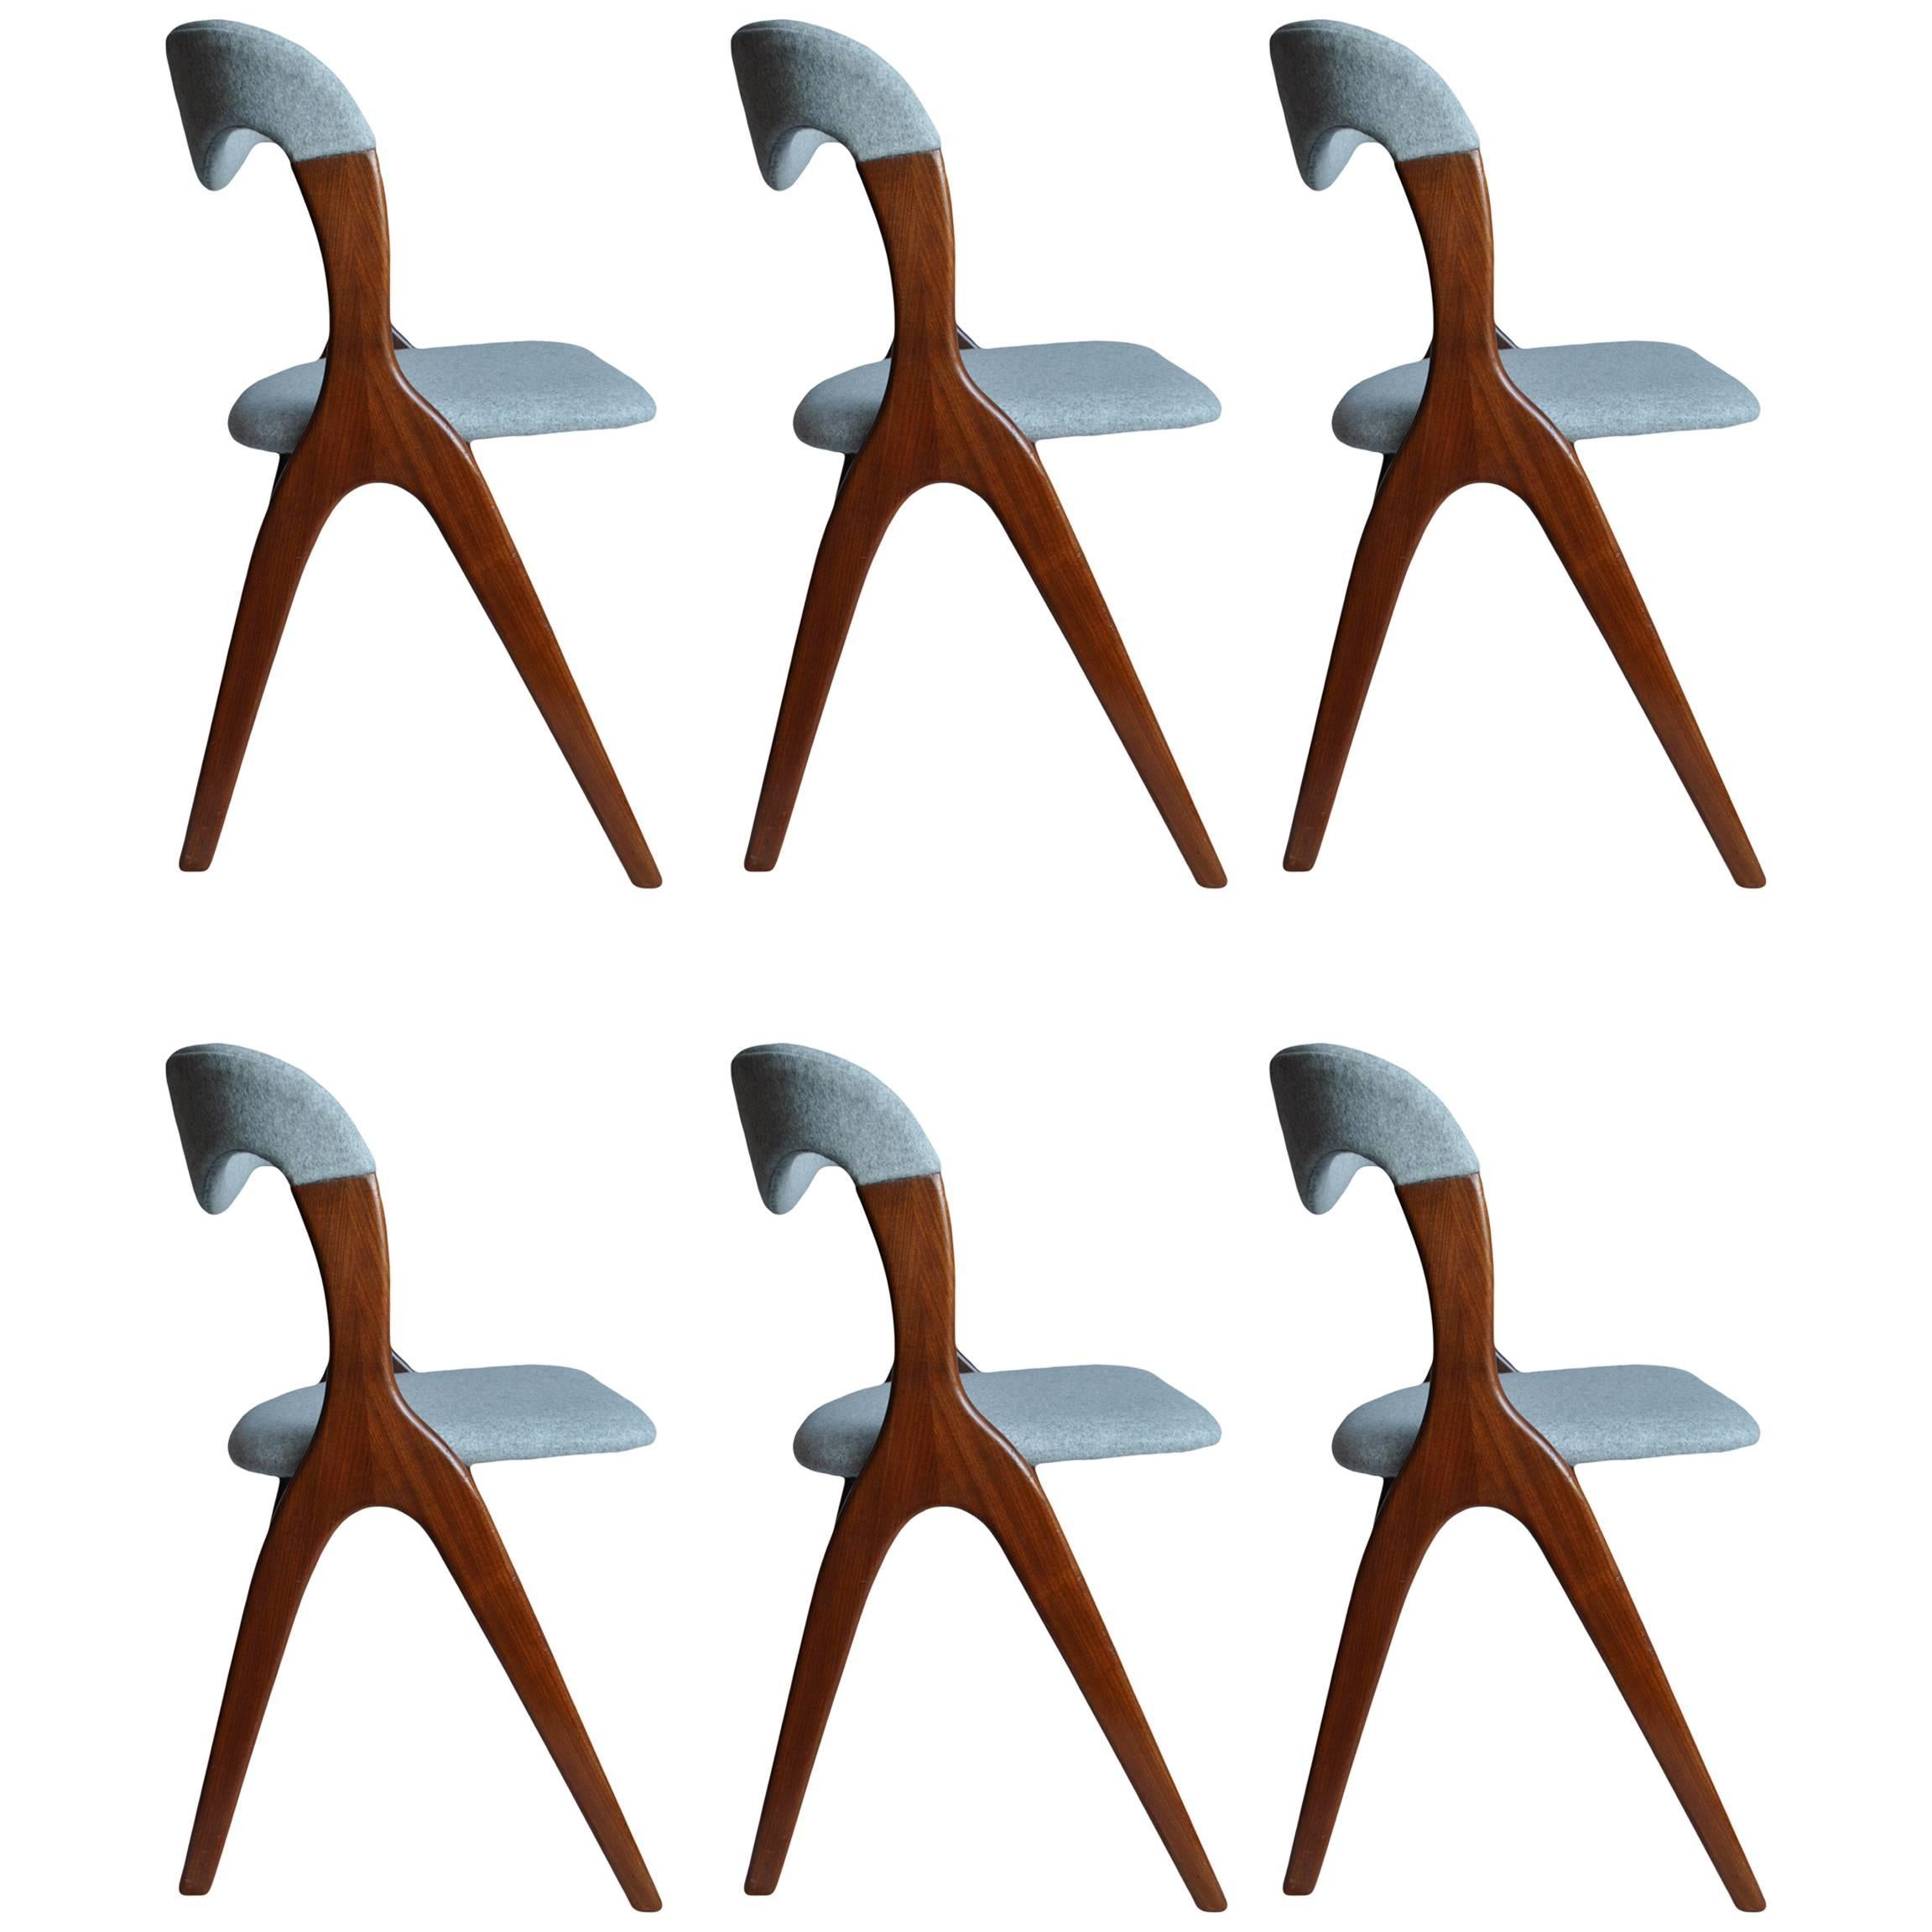 Danish Midcentury Dining Chairs, set of eight. Restored.